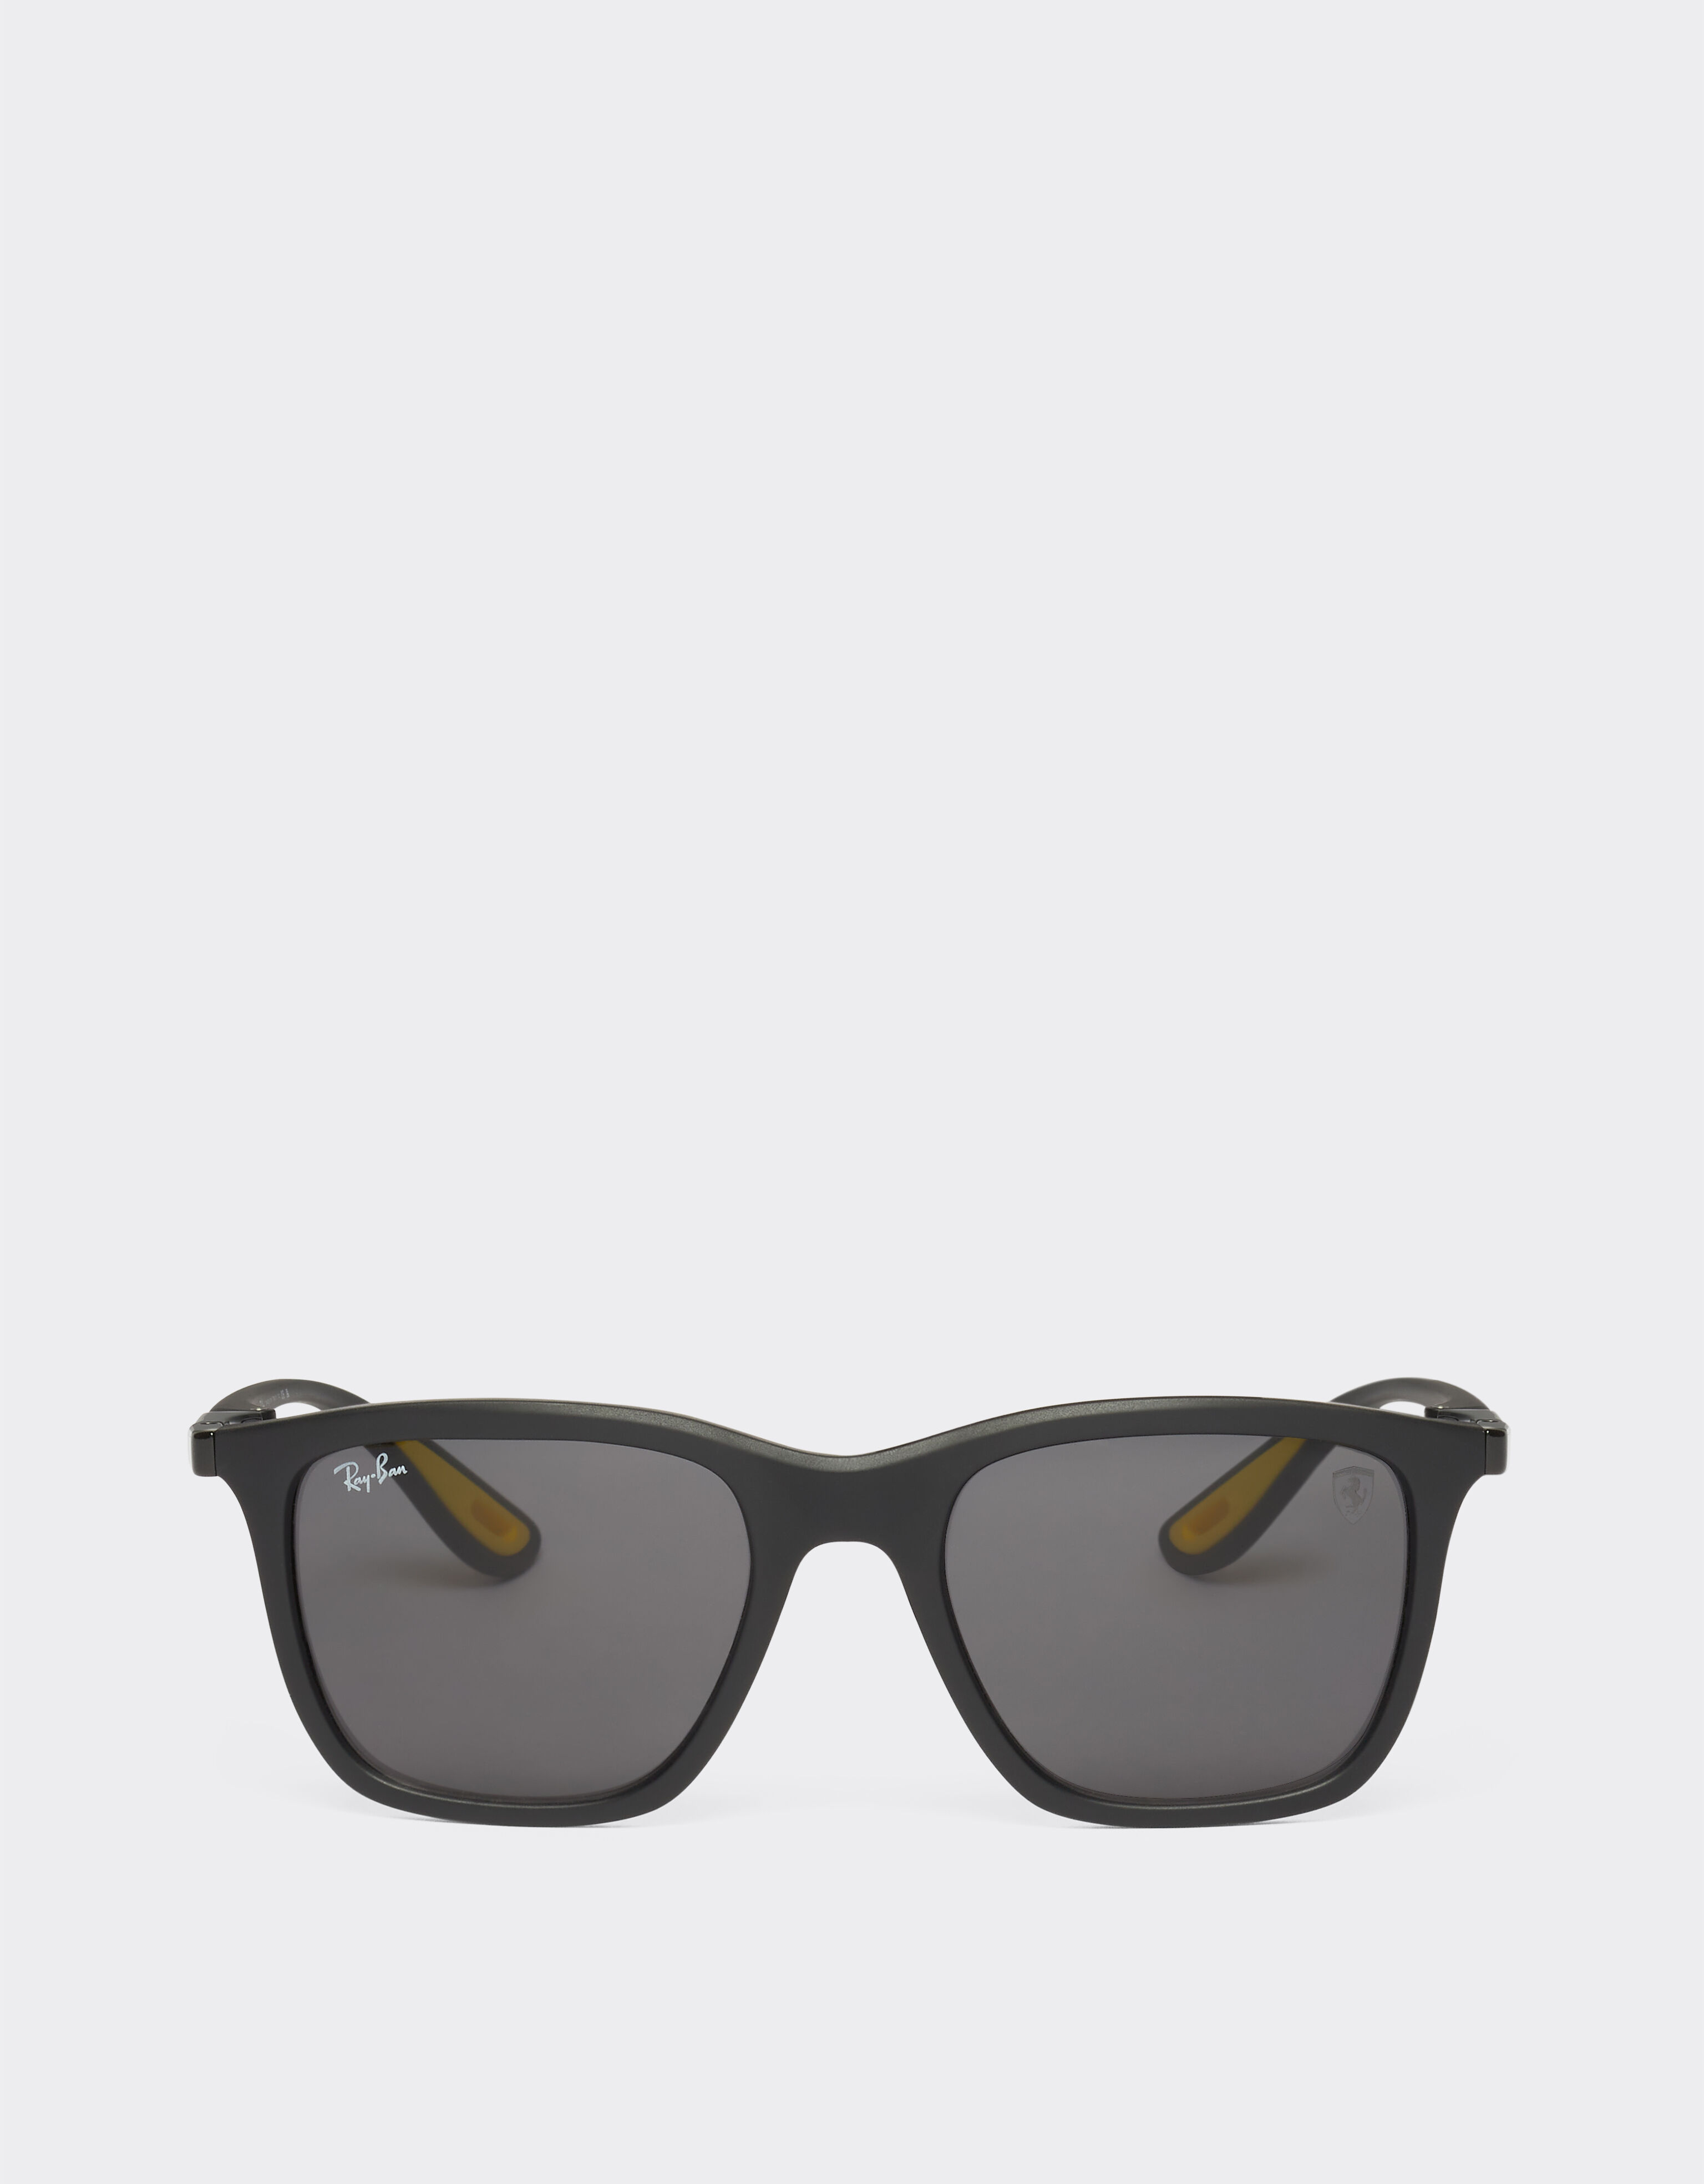 Ferrari Ray-Ban for Scuderia Ferrari 0RB4433M black sunglasses with dark grey lenses Optical White F1258f